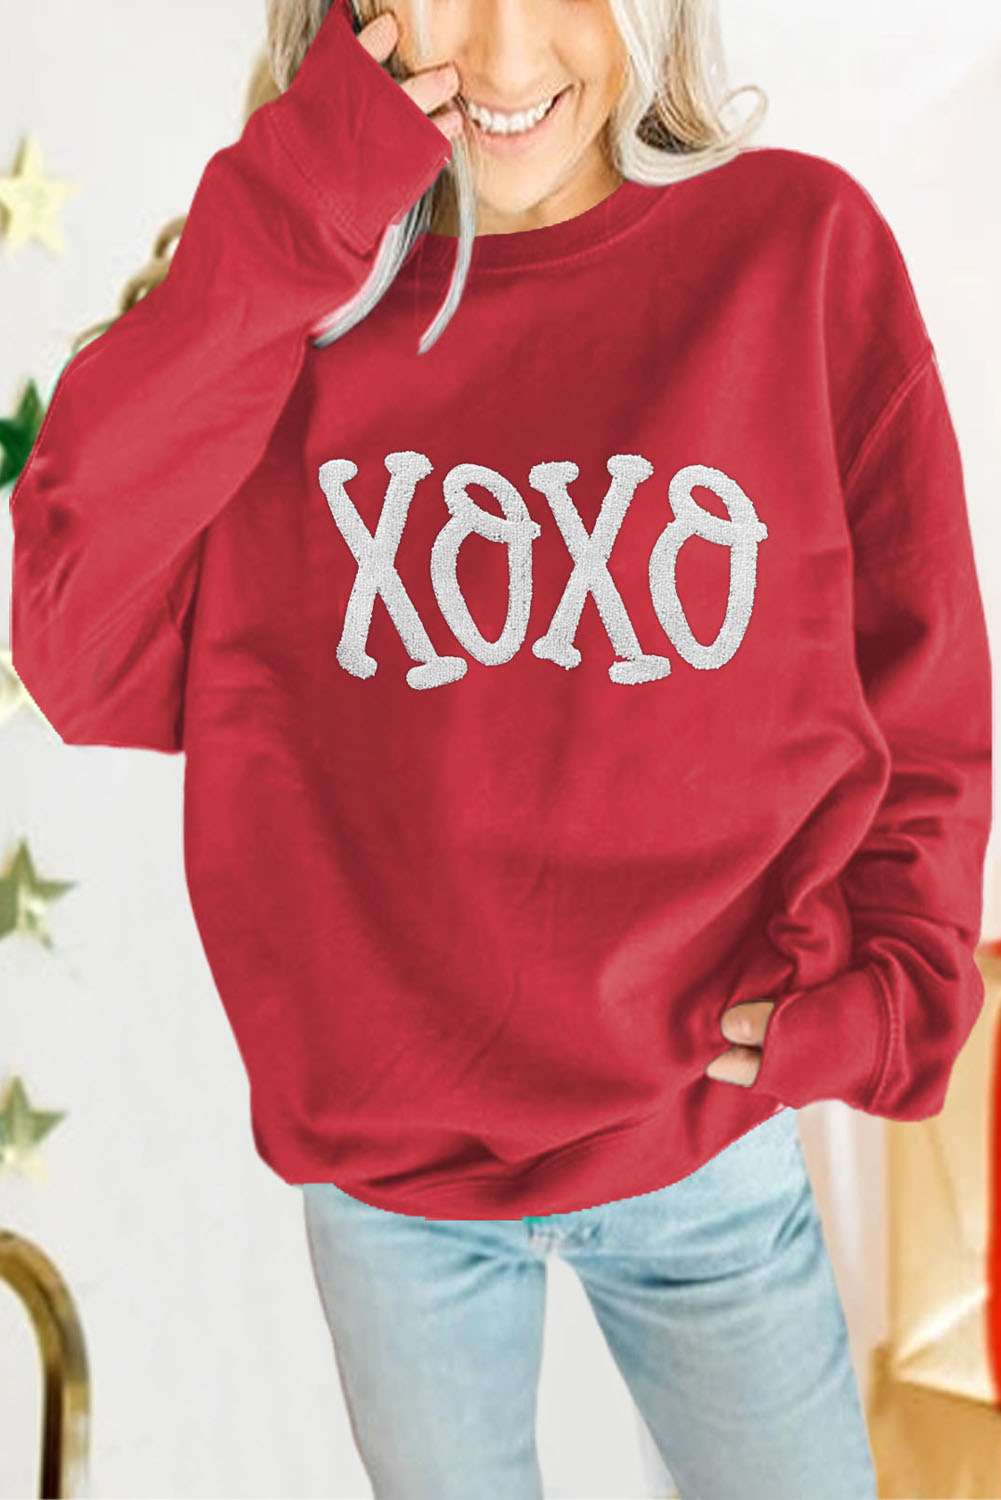  Racing Red XOXO Print Drop Sleeve Pullover Sweatshirt